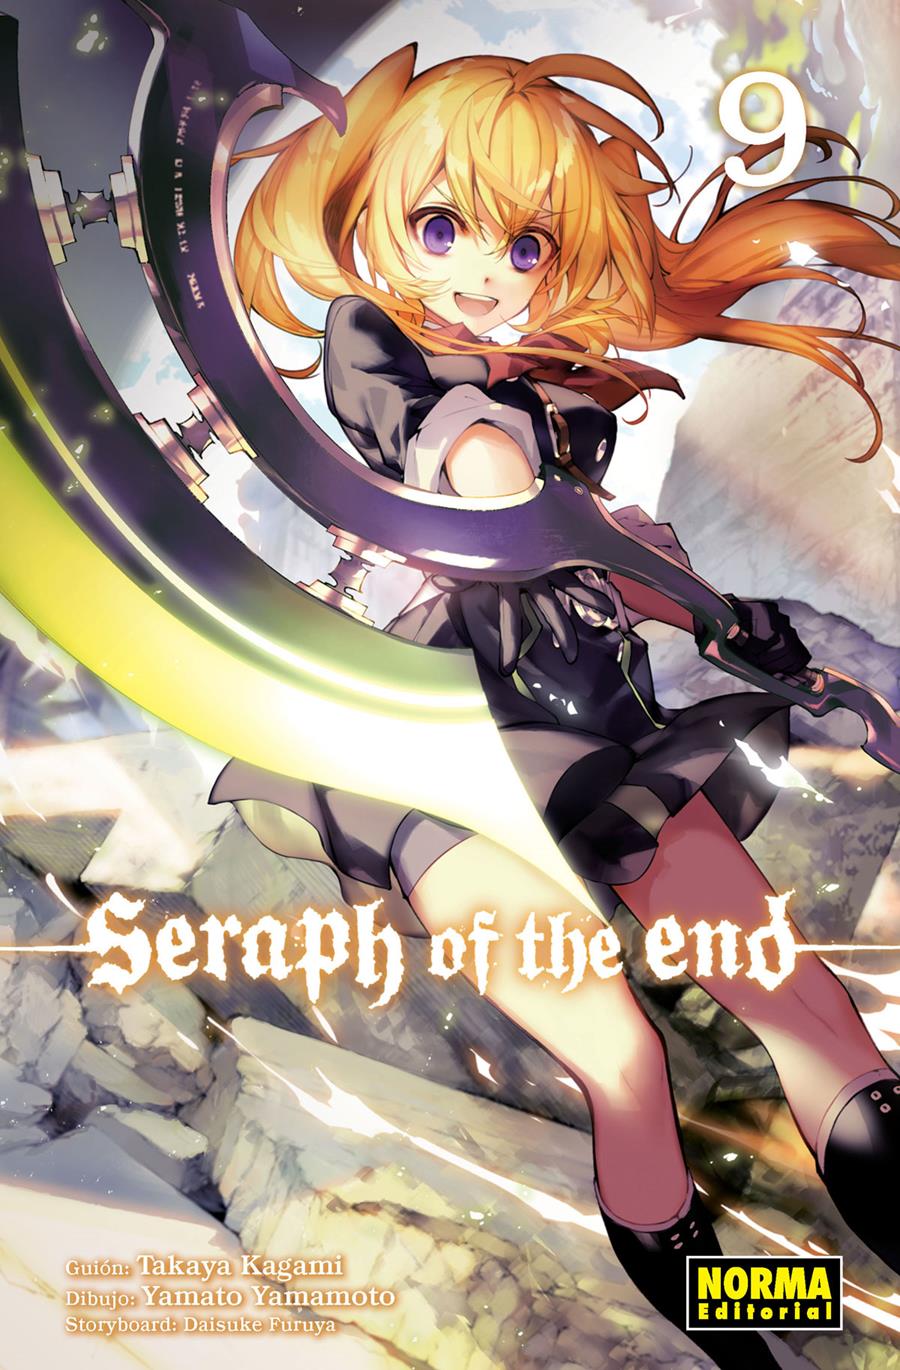 Seraph Of The End 09 | N0118-NOR25 | Takaya Kagami, Yamato Yamamoto, Daisuke Furuya | Terra de Còmic - Tu tienda de cómics online especializada en cómics, manga y merchandising